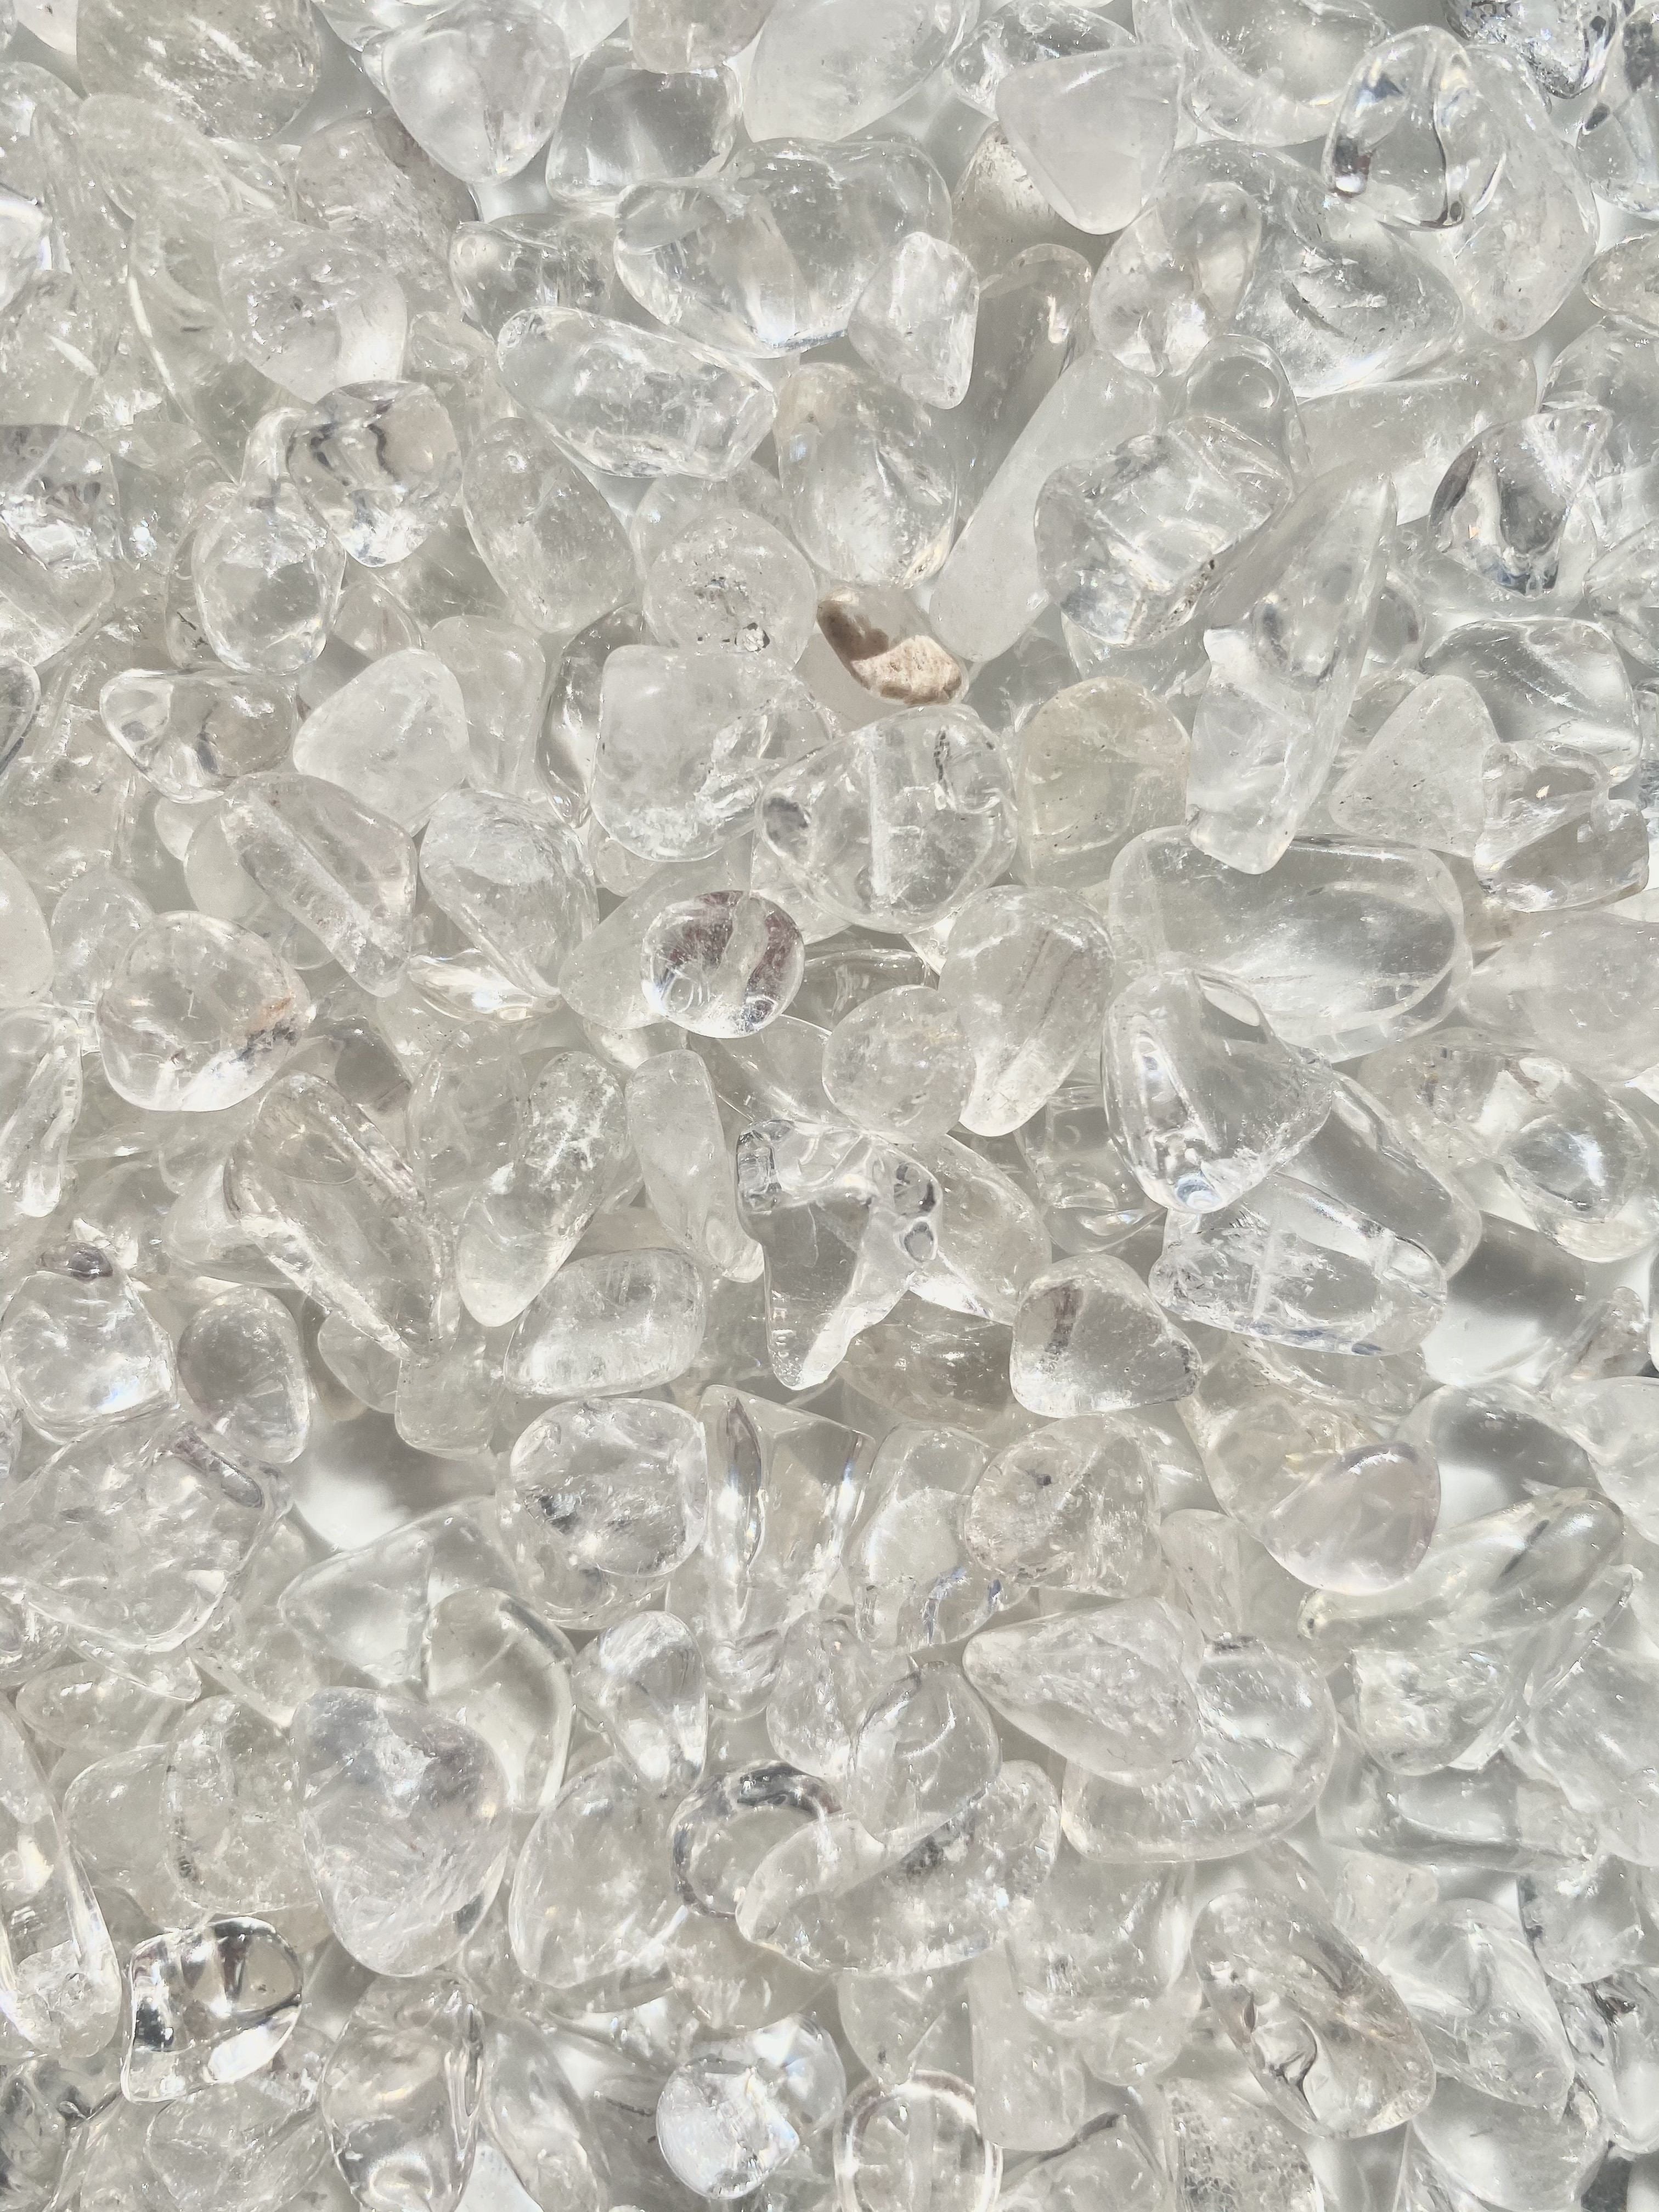 Clear Quartz Crystal Water Bottle Gravel Pouch